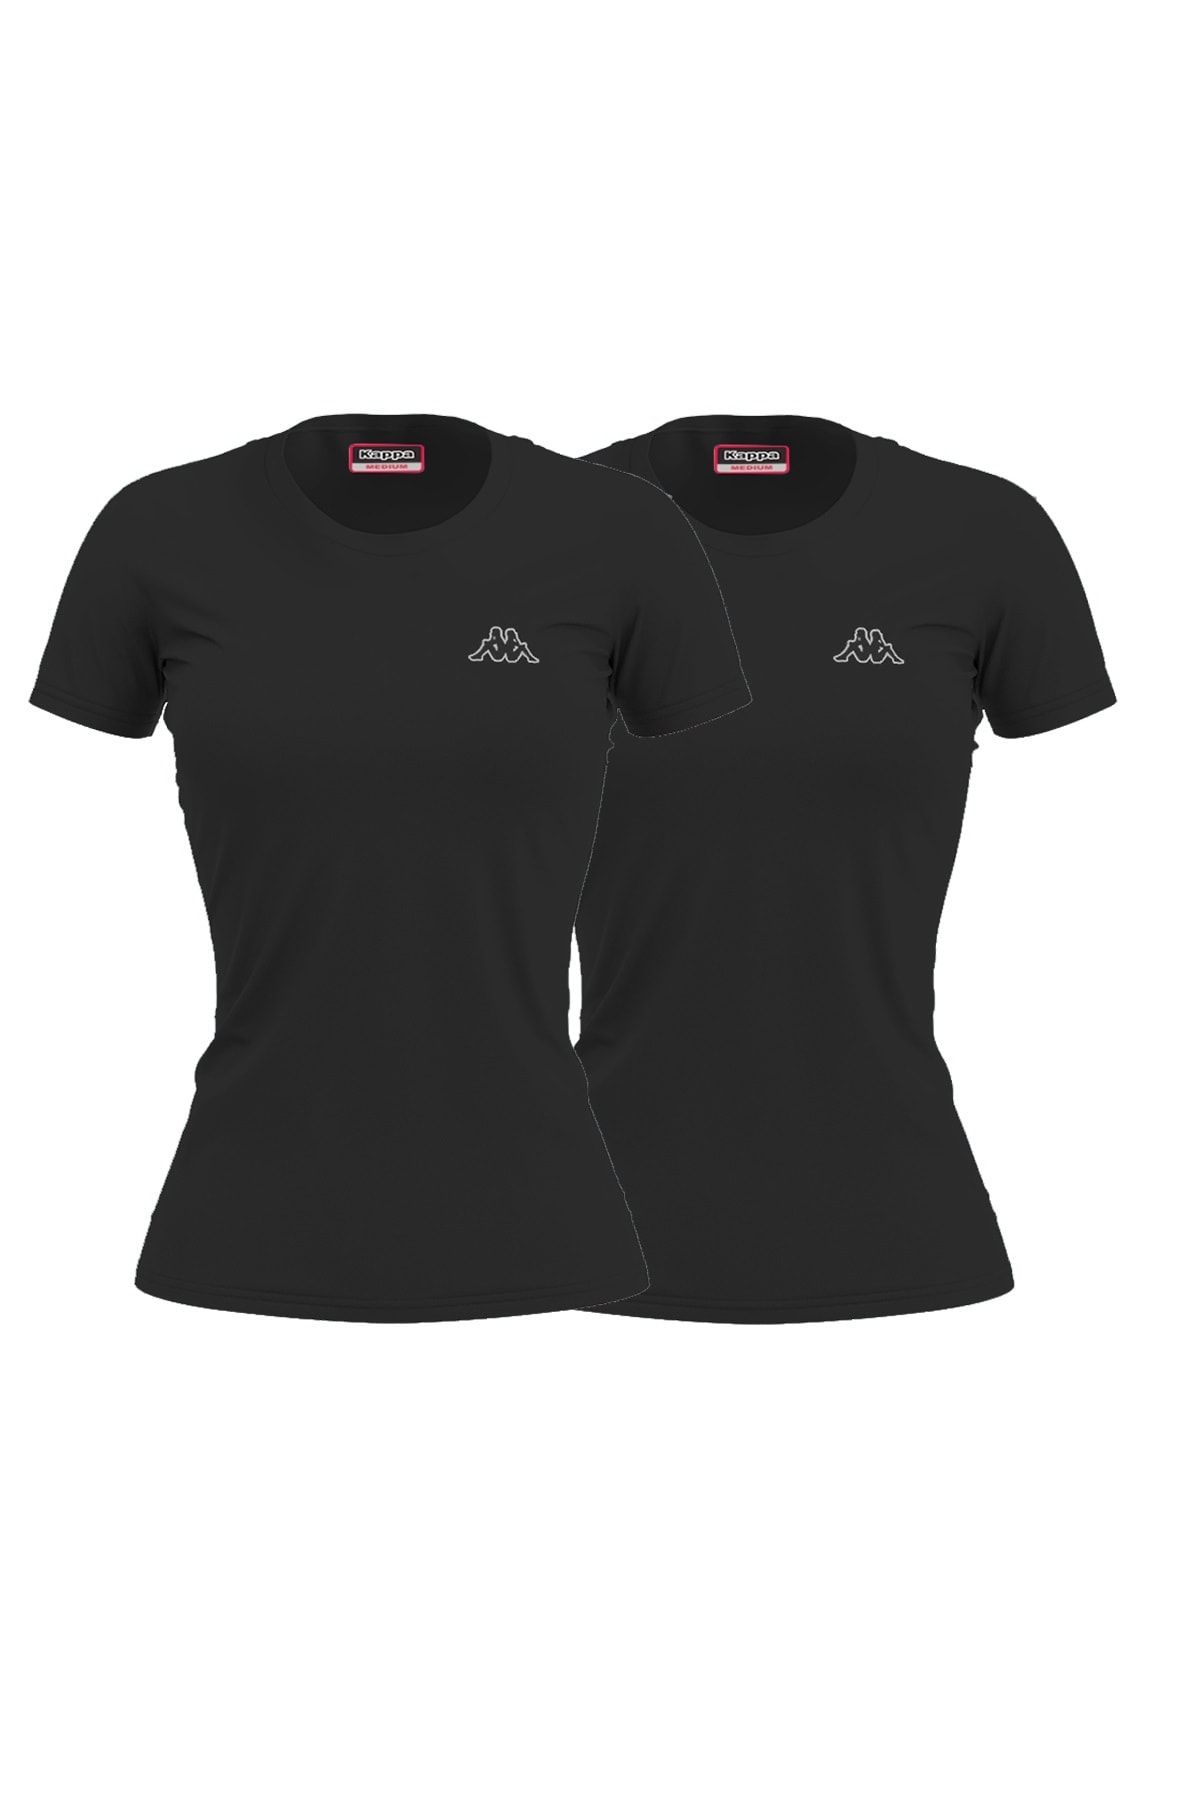 Kappa Kadın Spor T-Shirt - BASIC  30014B2-005